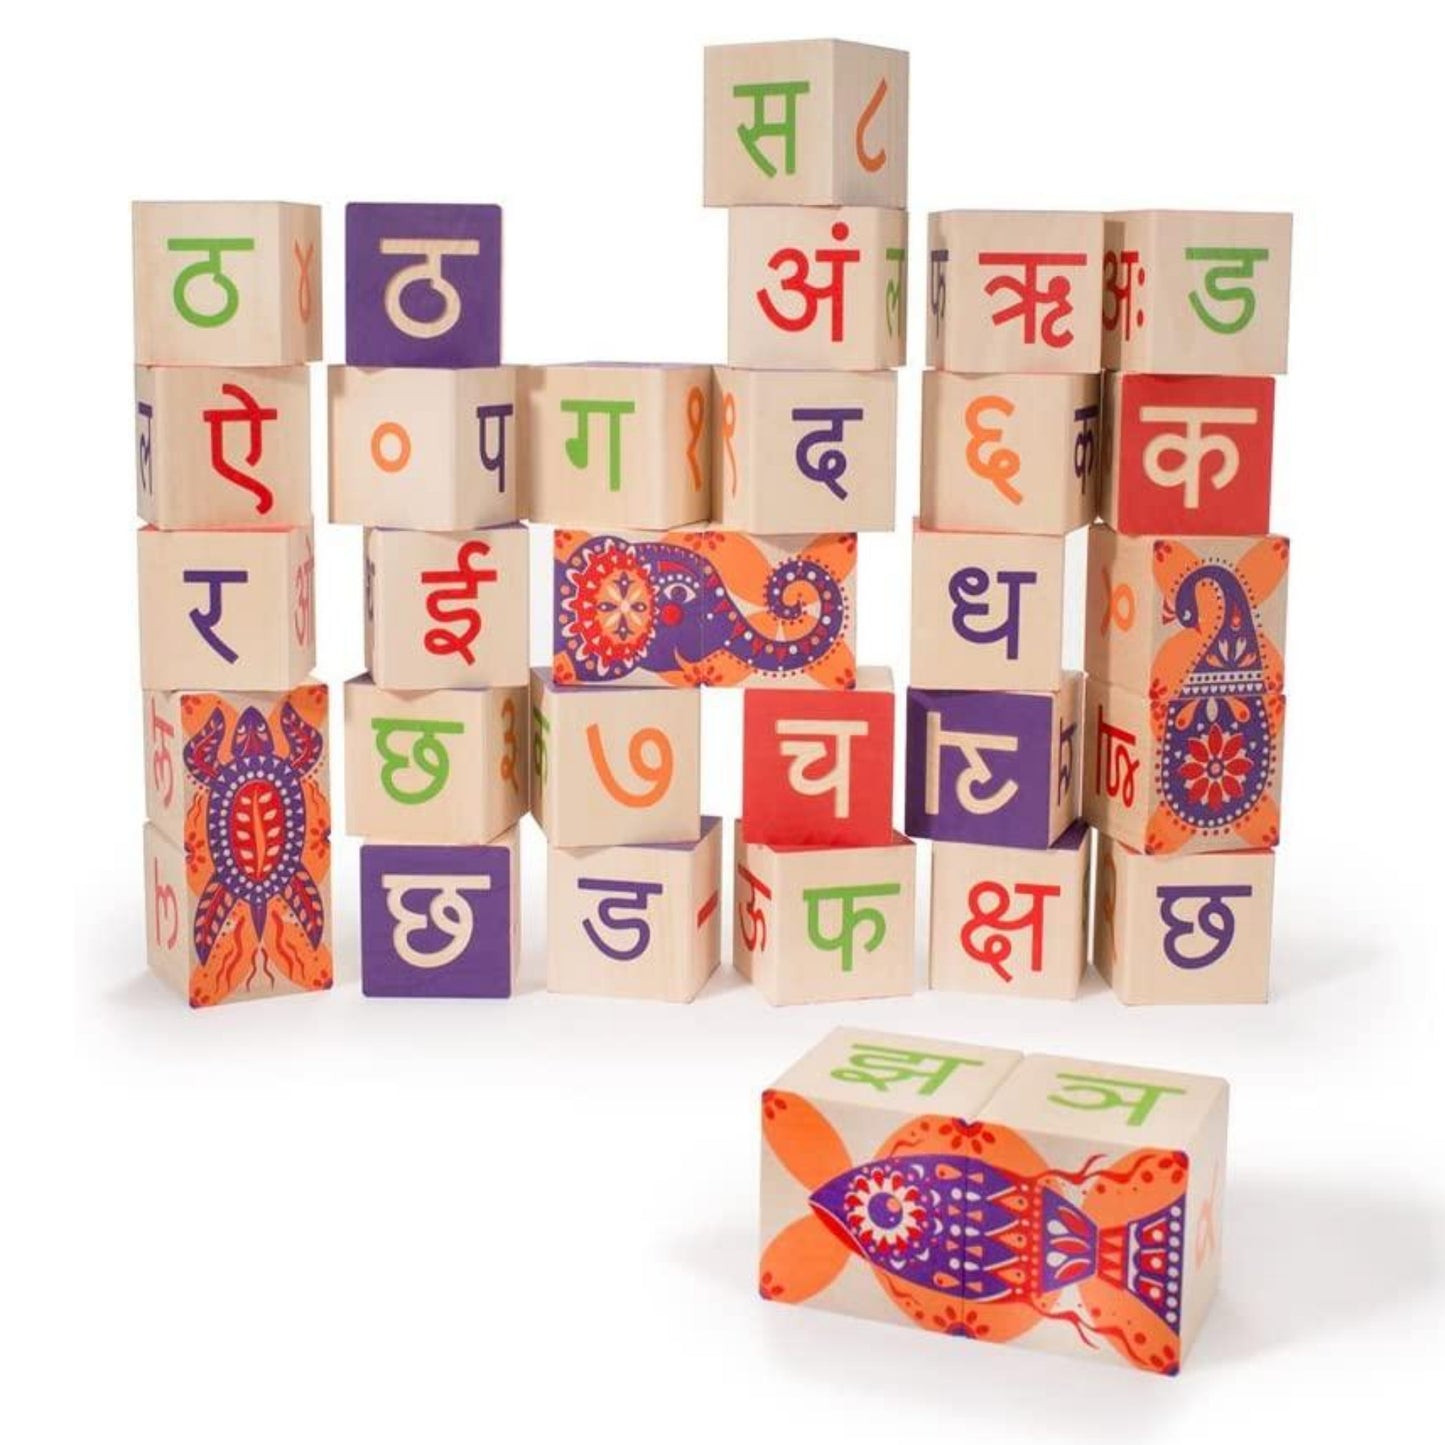 Hindi Wooden Blocks